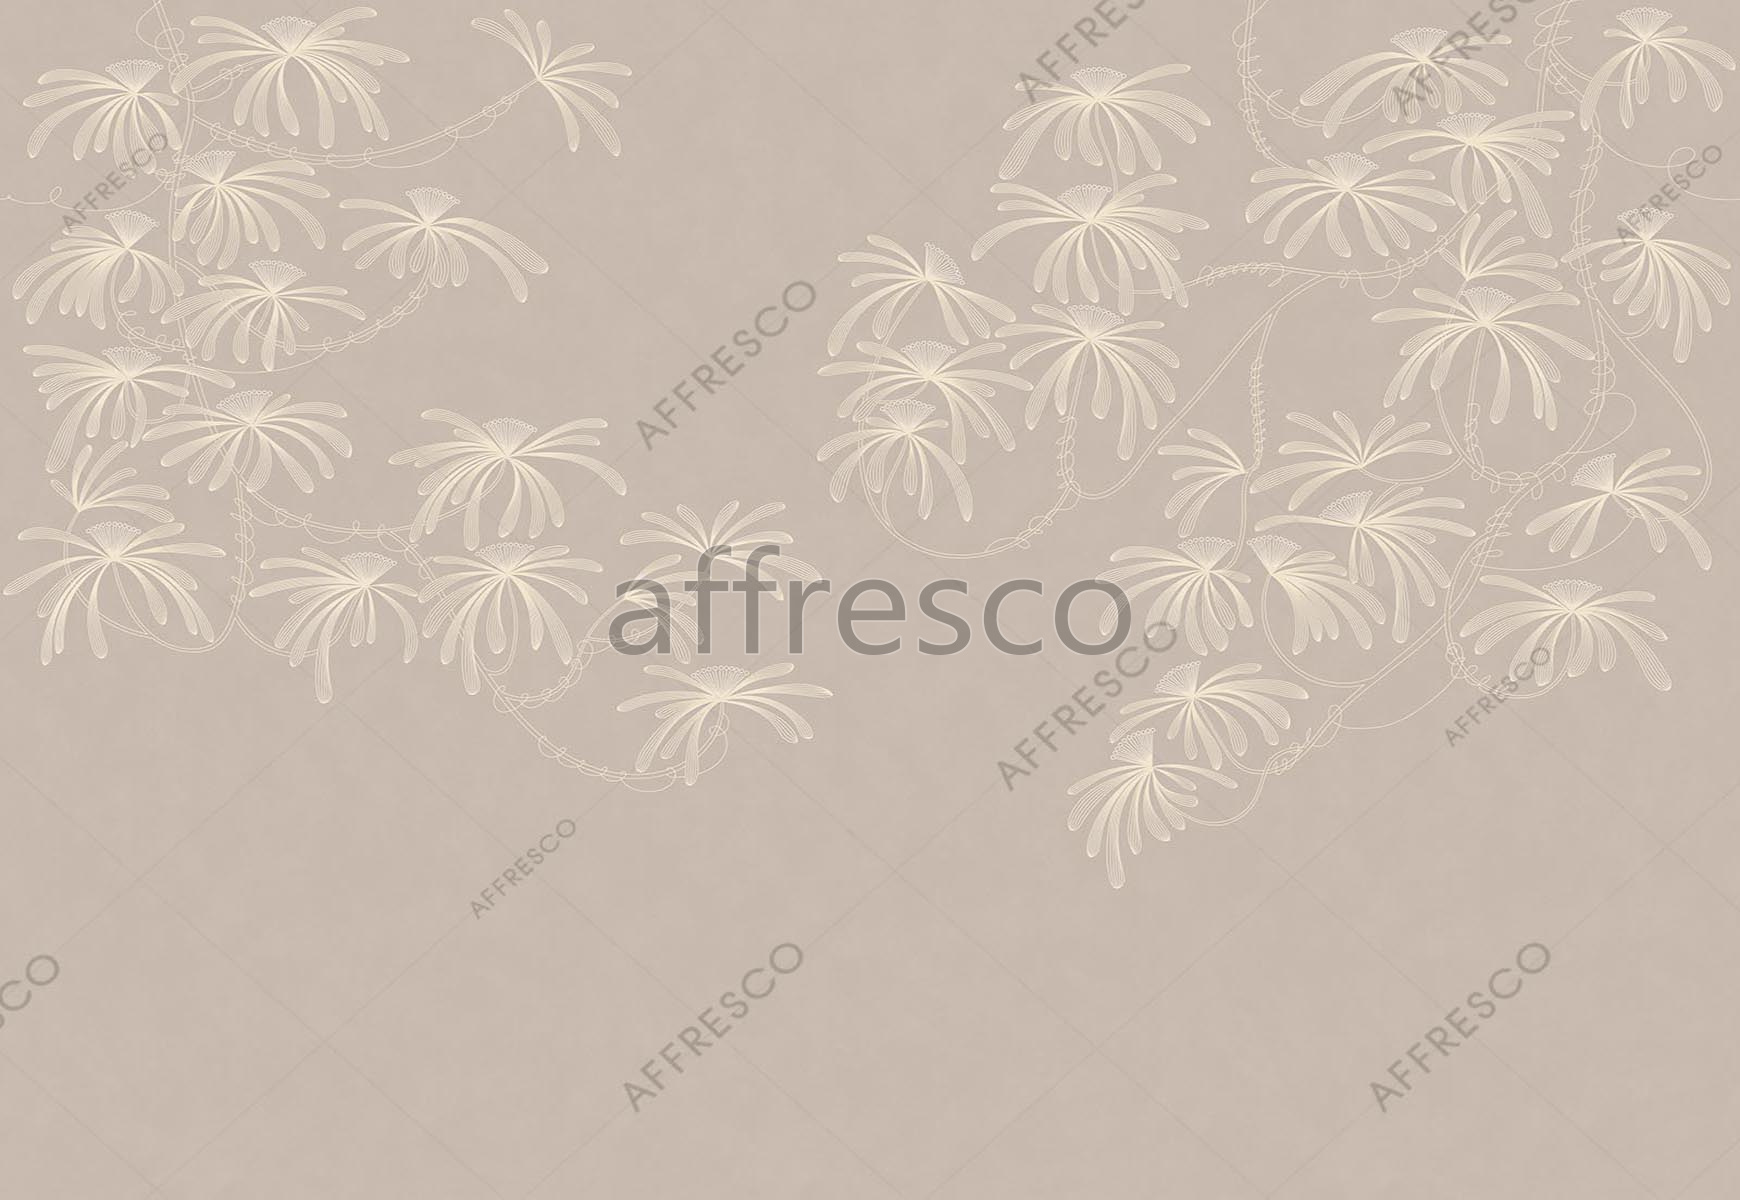 ID139237 | Forest | Fiji plants | Affresco Factory